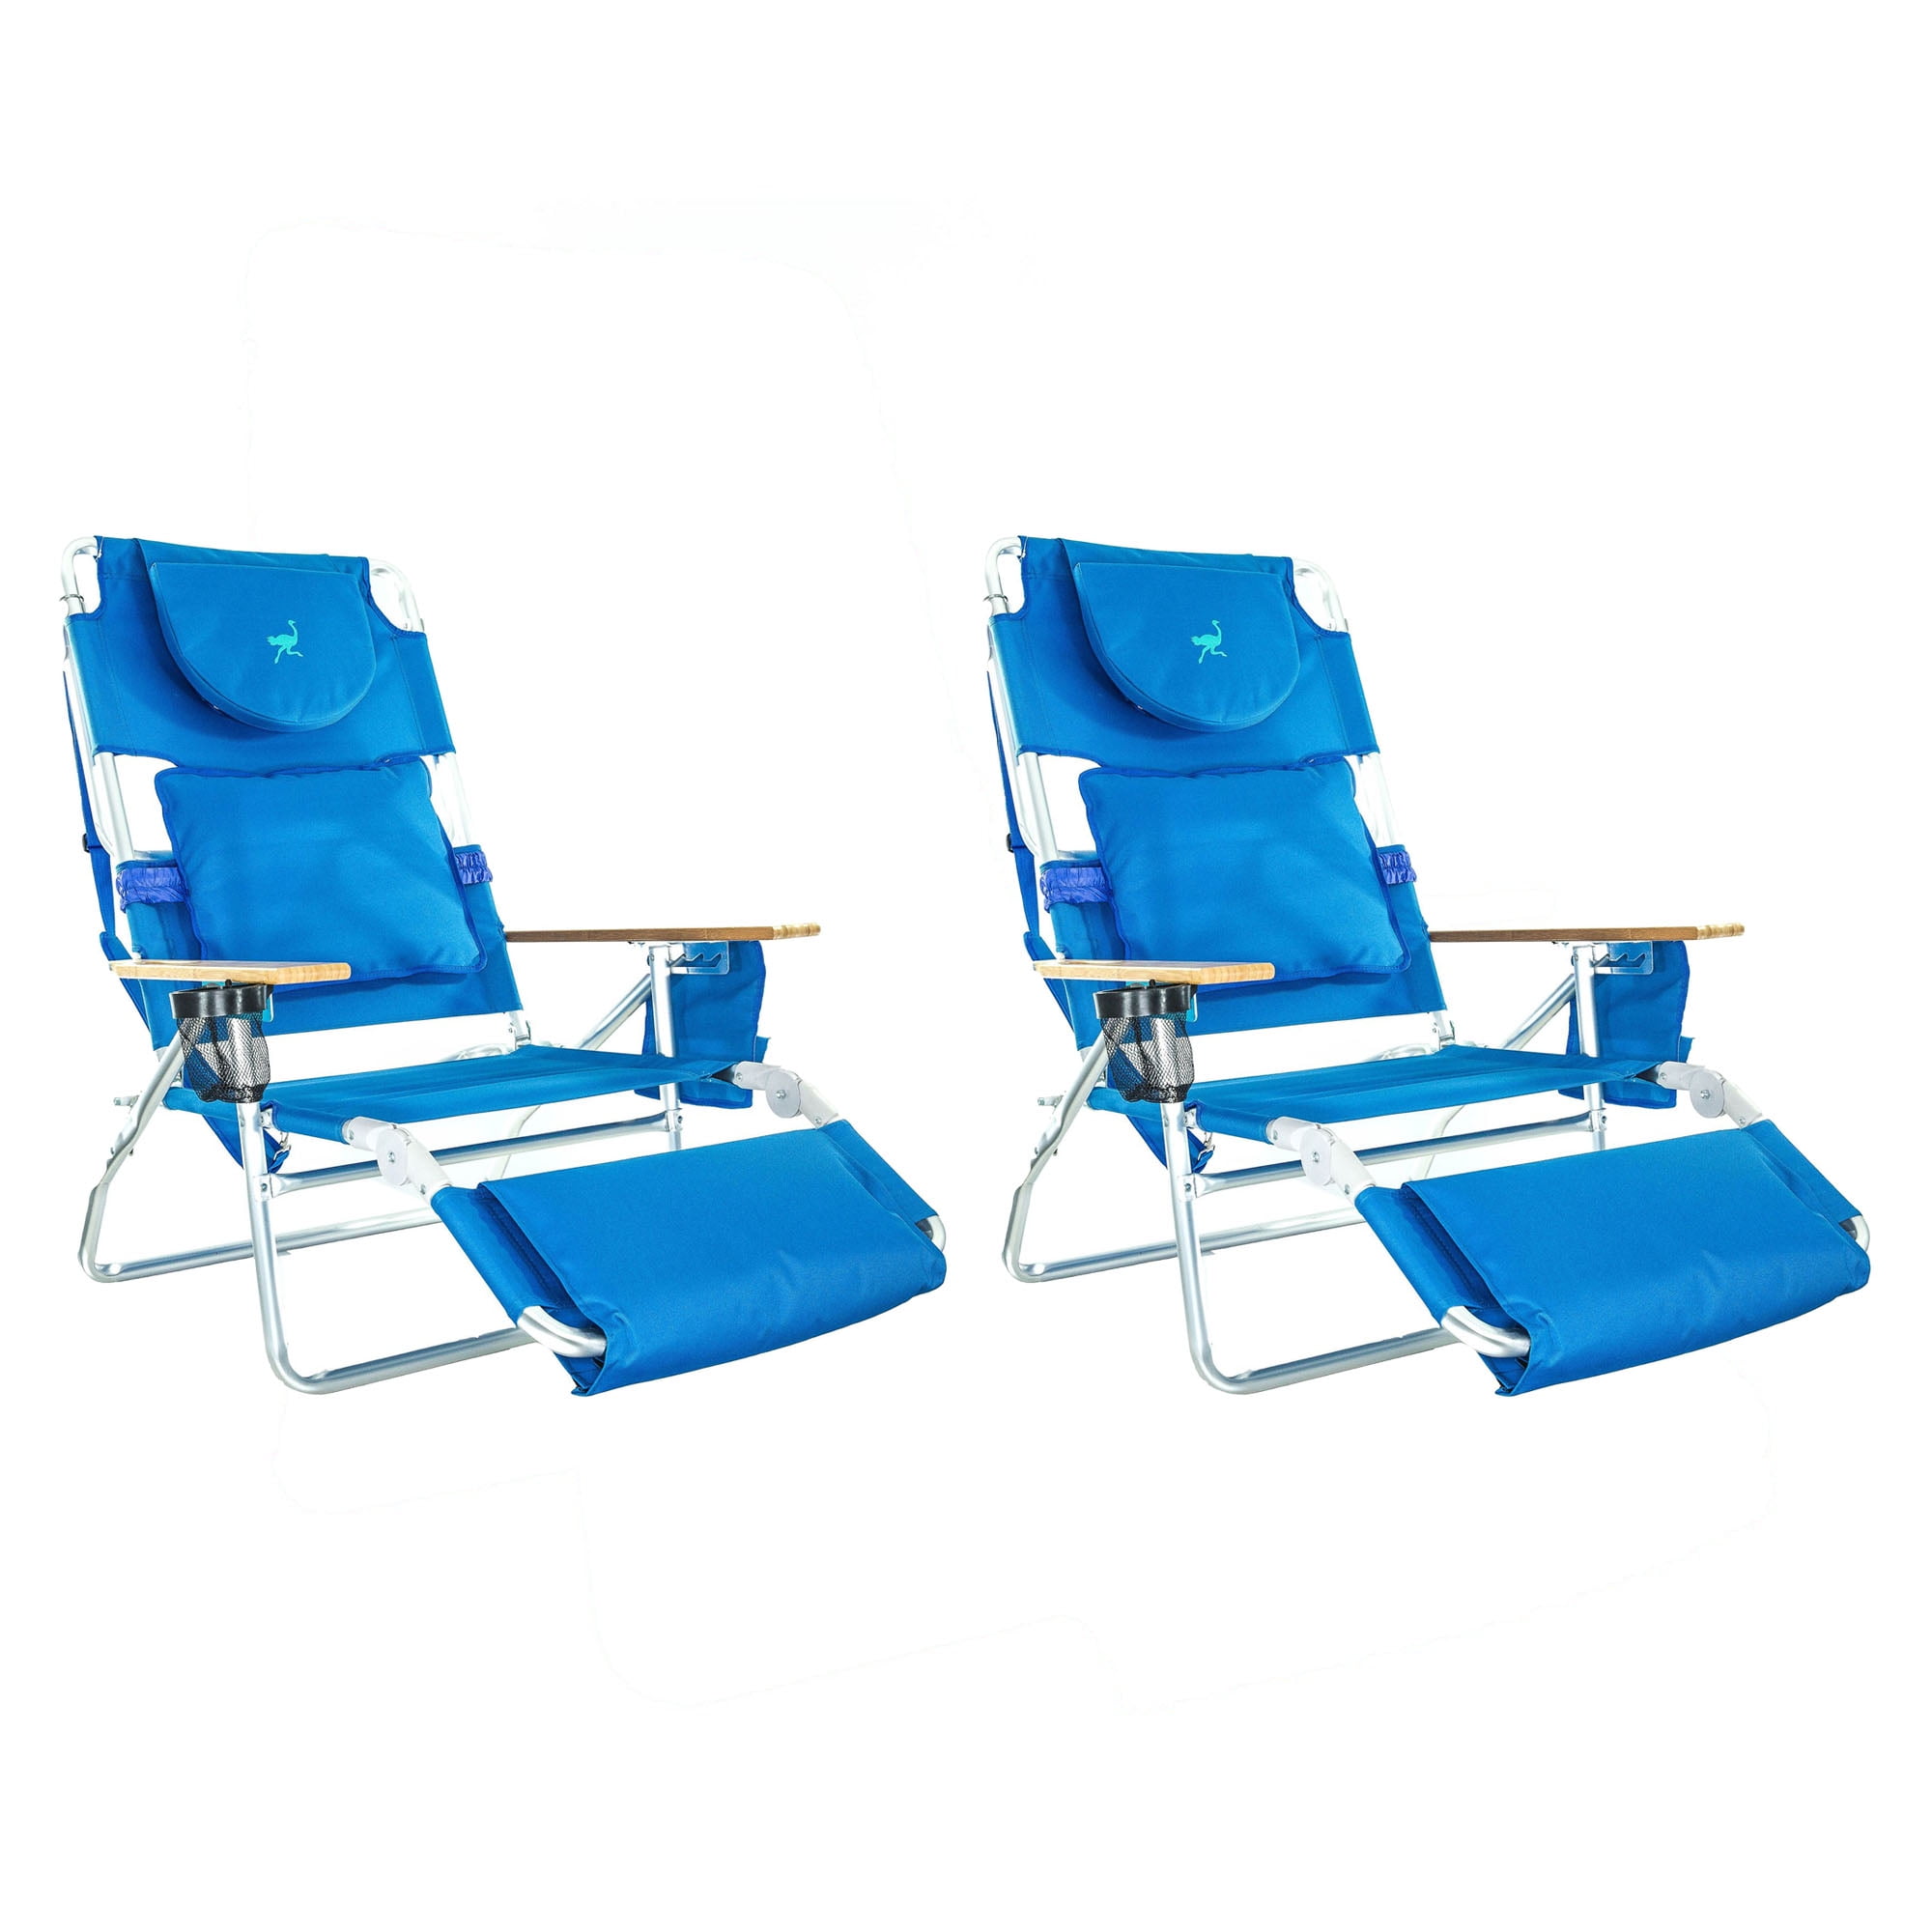 Portable Ostrich Lawn Chair Folding Outdoor Chaise Lounge Pool Beach Patio Blue 